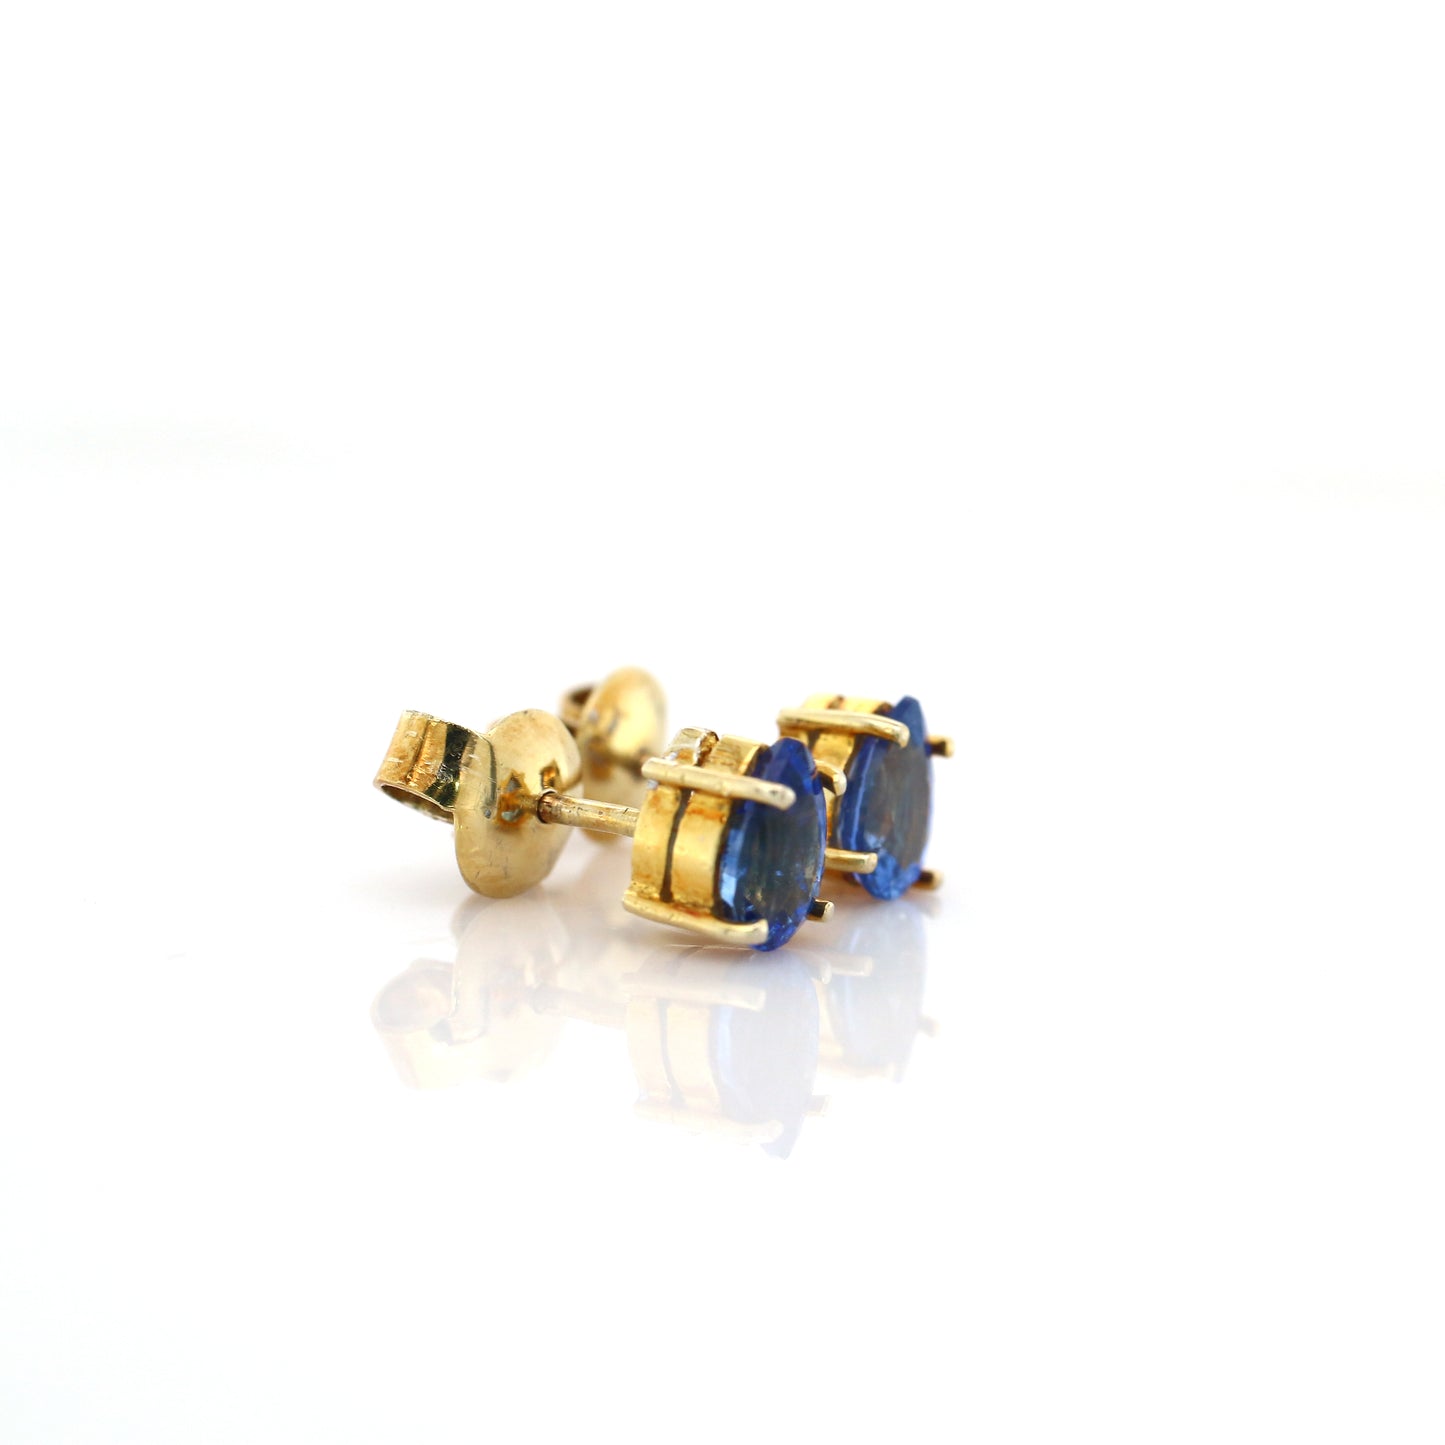 Blue Sapphire Earring - 10k Yellow Gold 1.38 gm